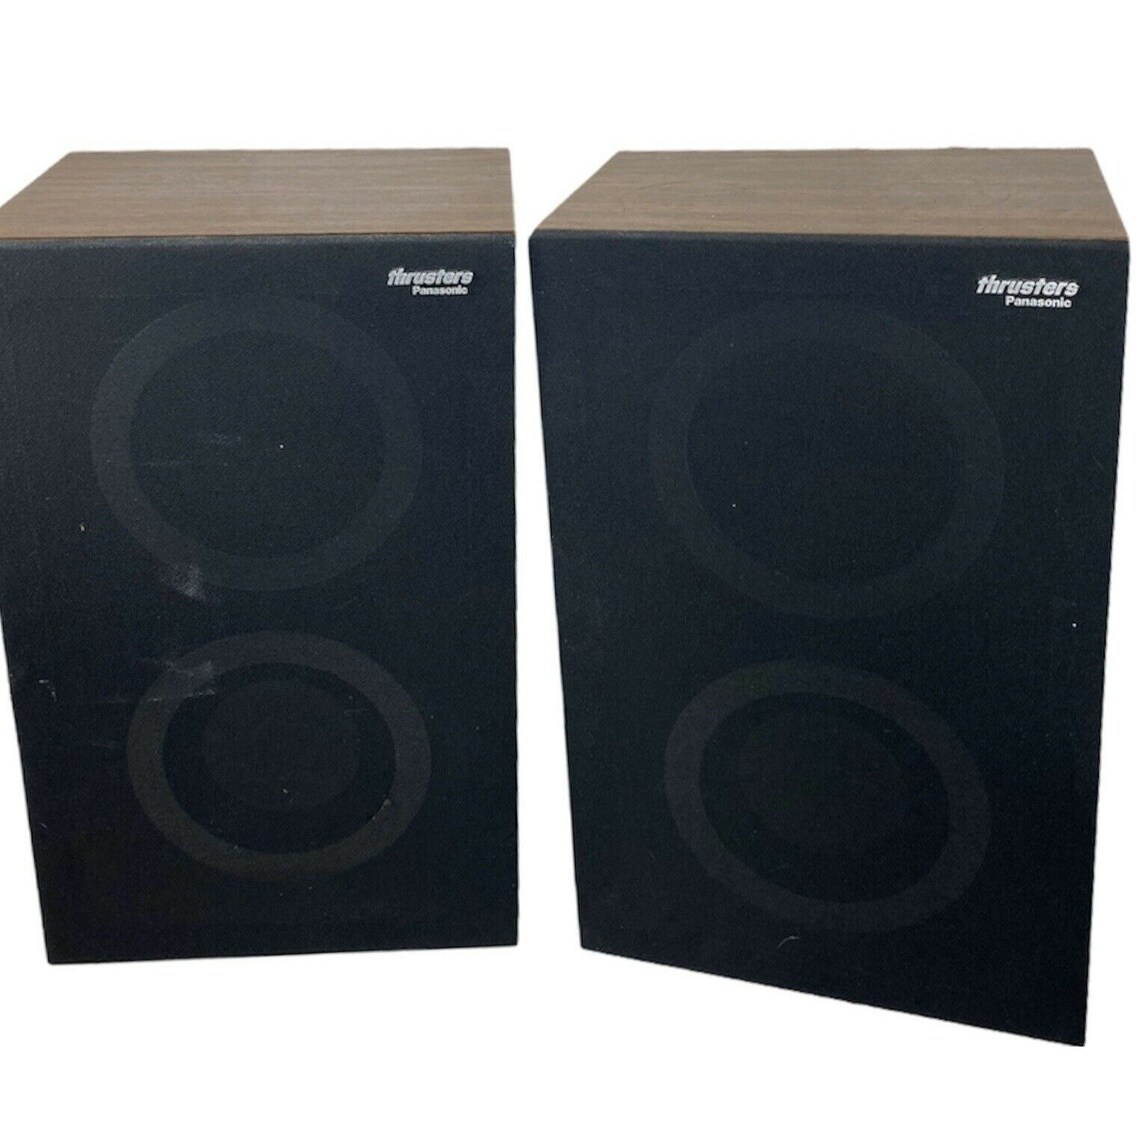 Panasonic Thrusters SB-180 Speaker System 2 Speakers | Etsy